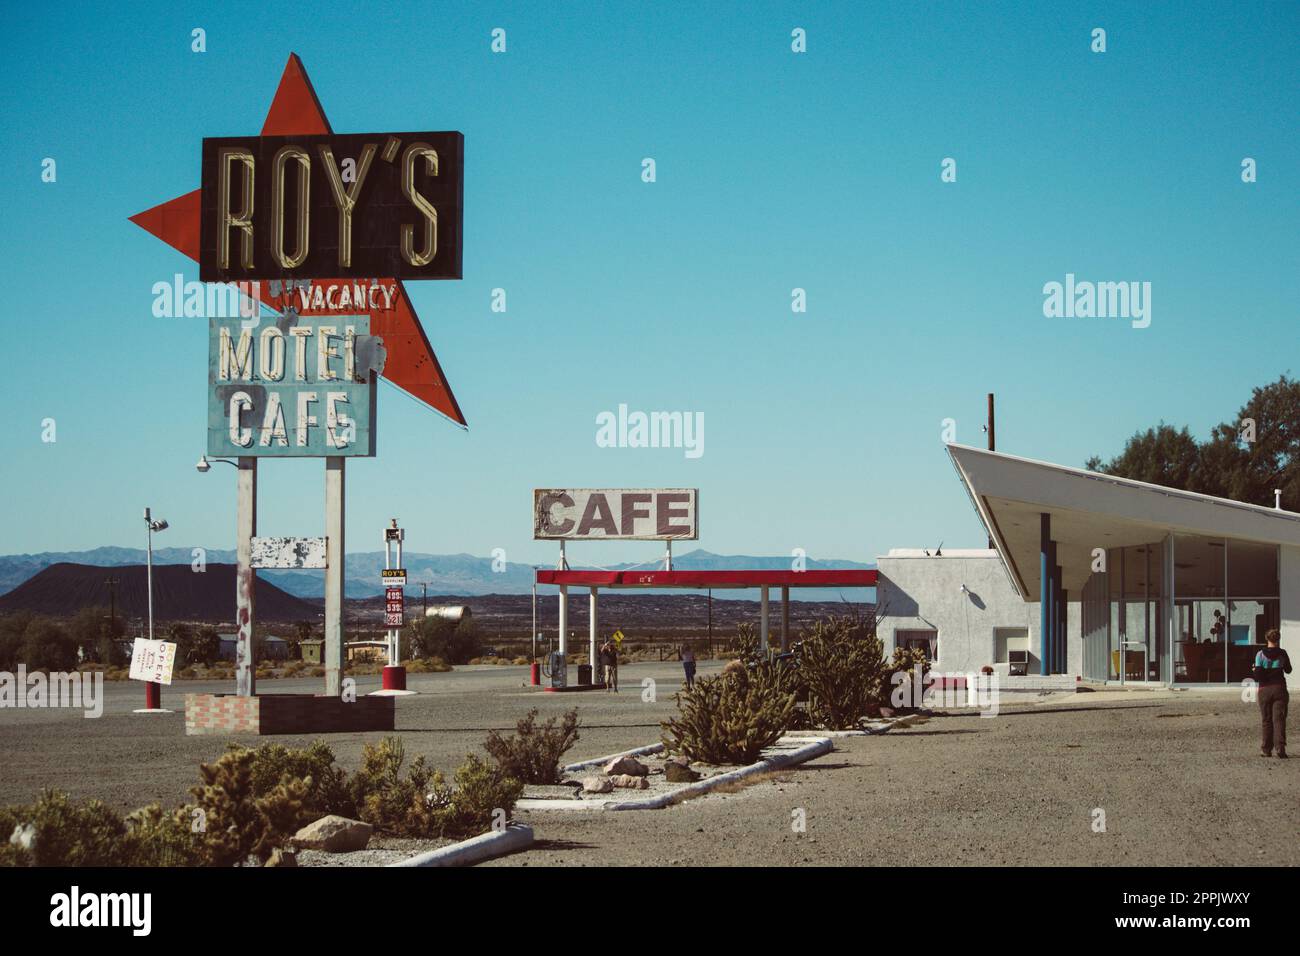 Berühmtes Roy's cafÃ und Tankstelle an der klassischen Route 66 Stockfoto